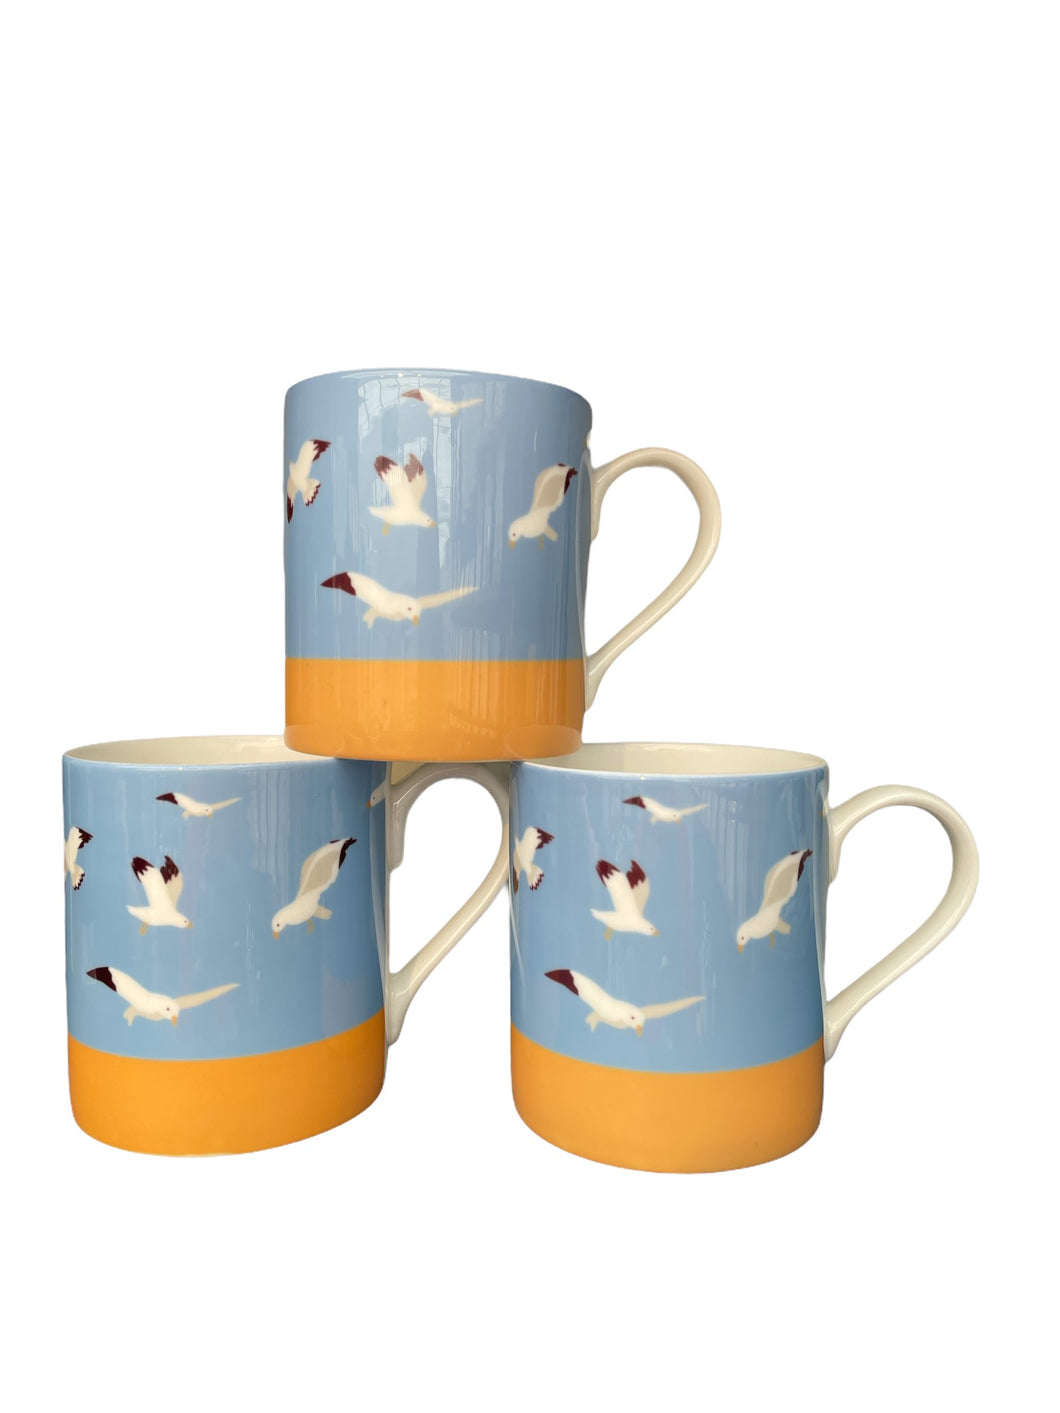 Wholesale Oh Gully Mug Set (Four 250ml Mugs) - Mustard and Gray Trade Homeware and Gifts - Made in Britain